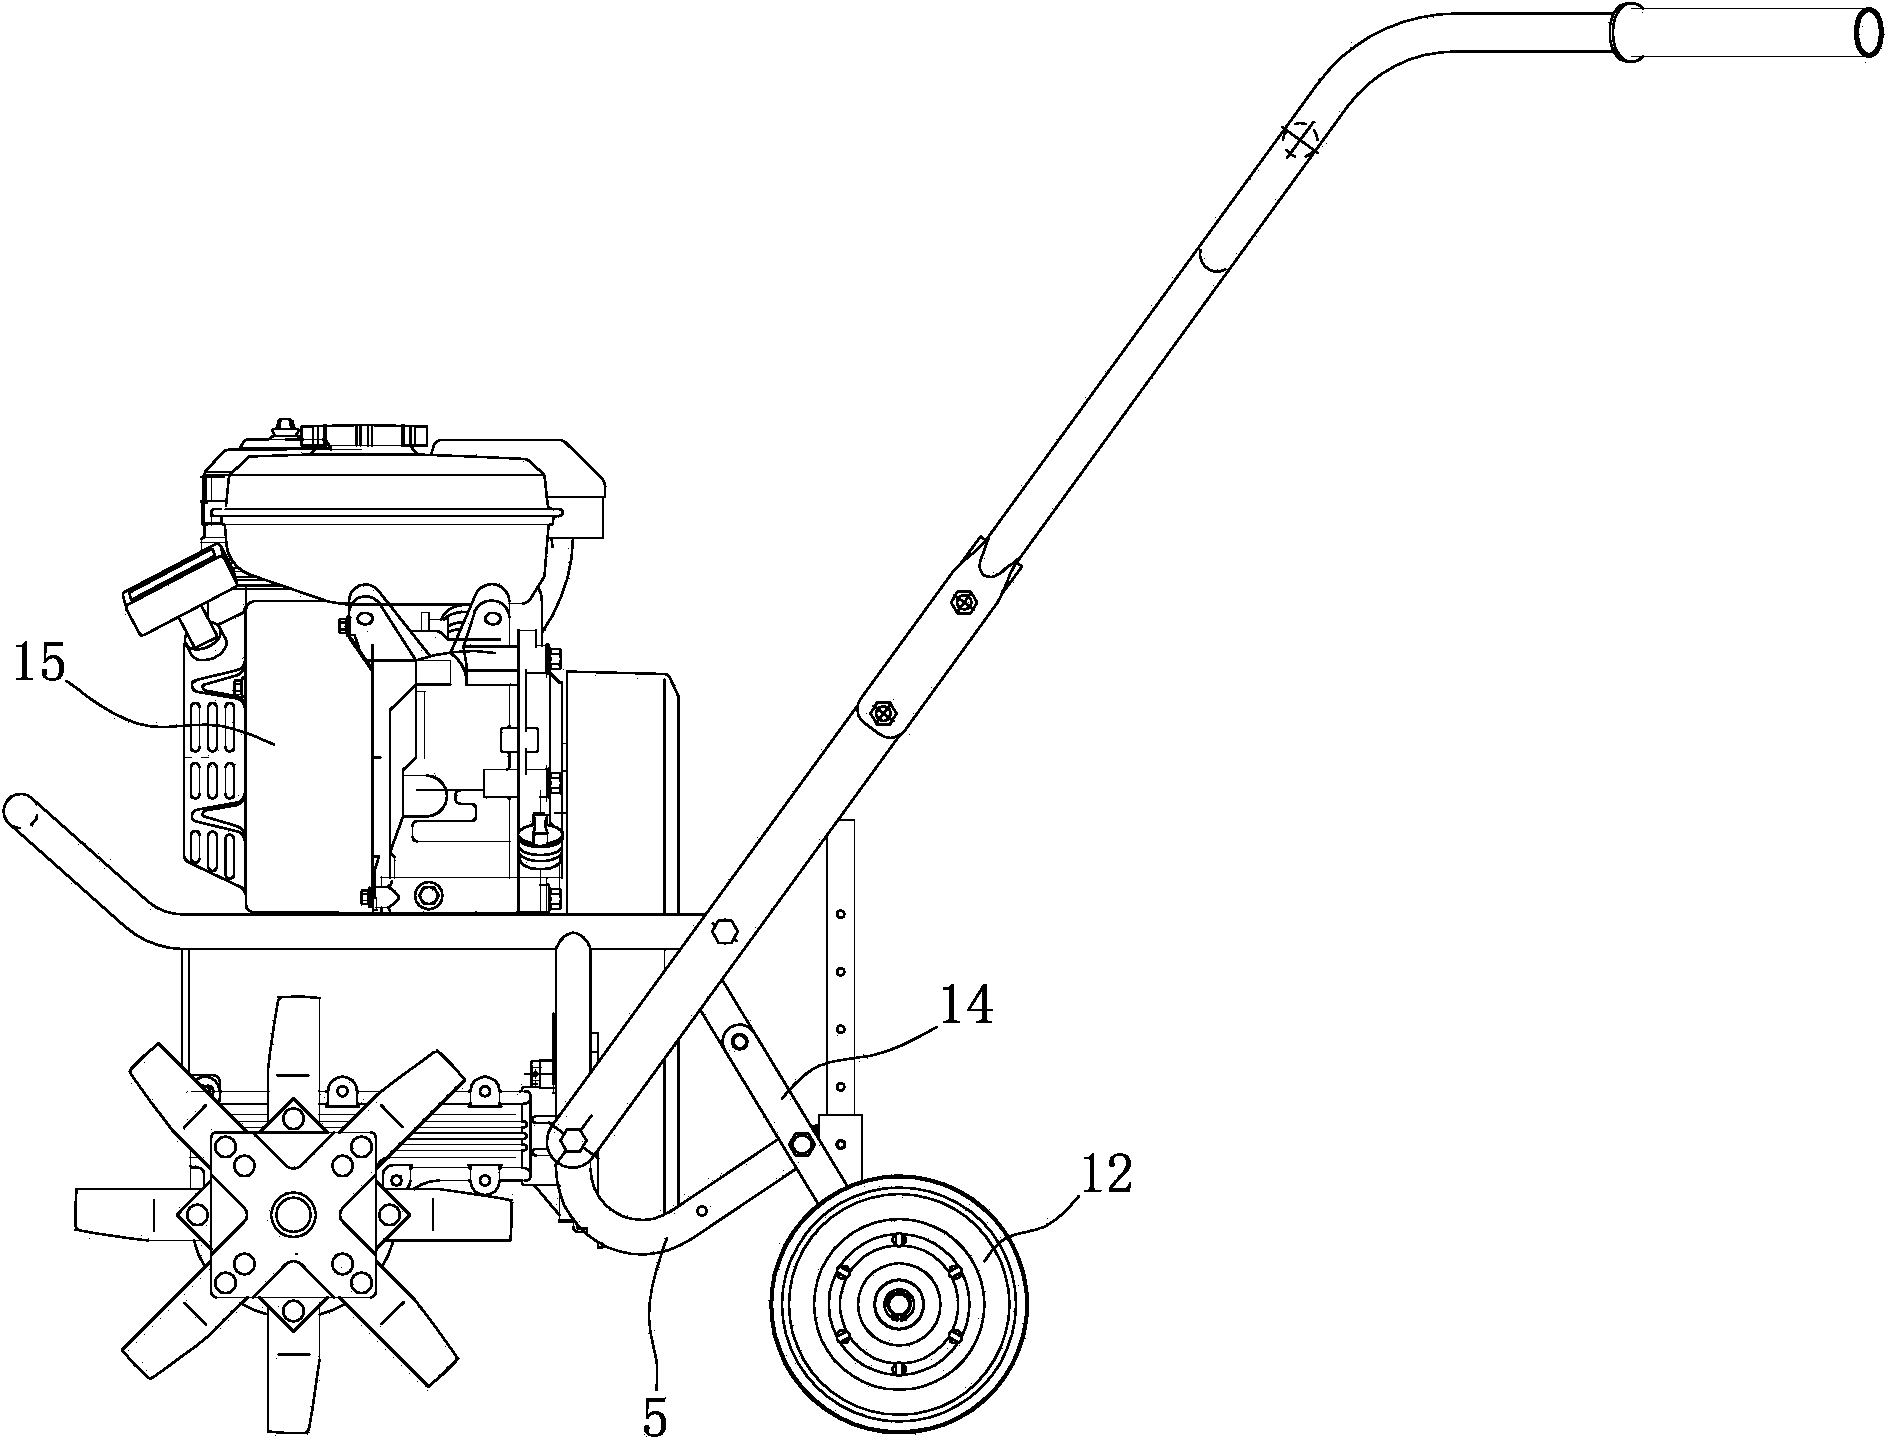 Portable mini tiller rear wheel assembly and engine arrangement structure